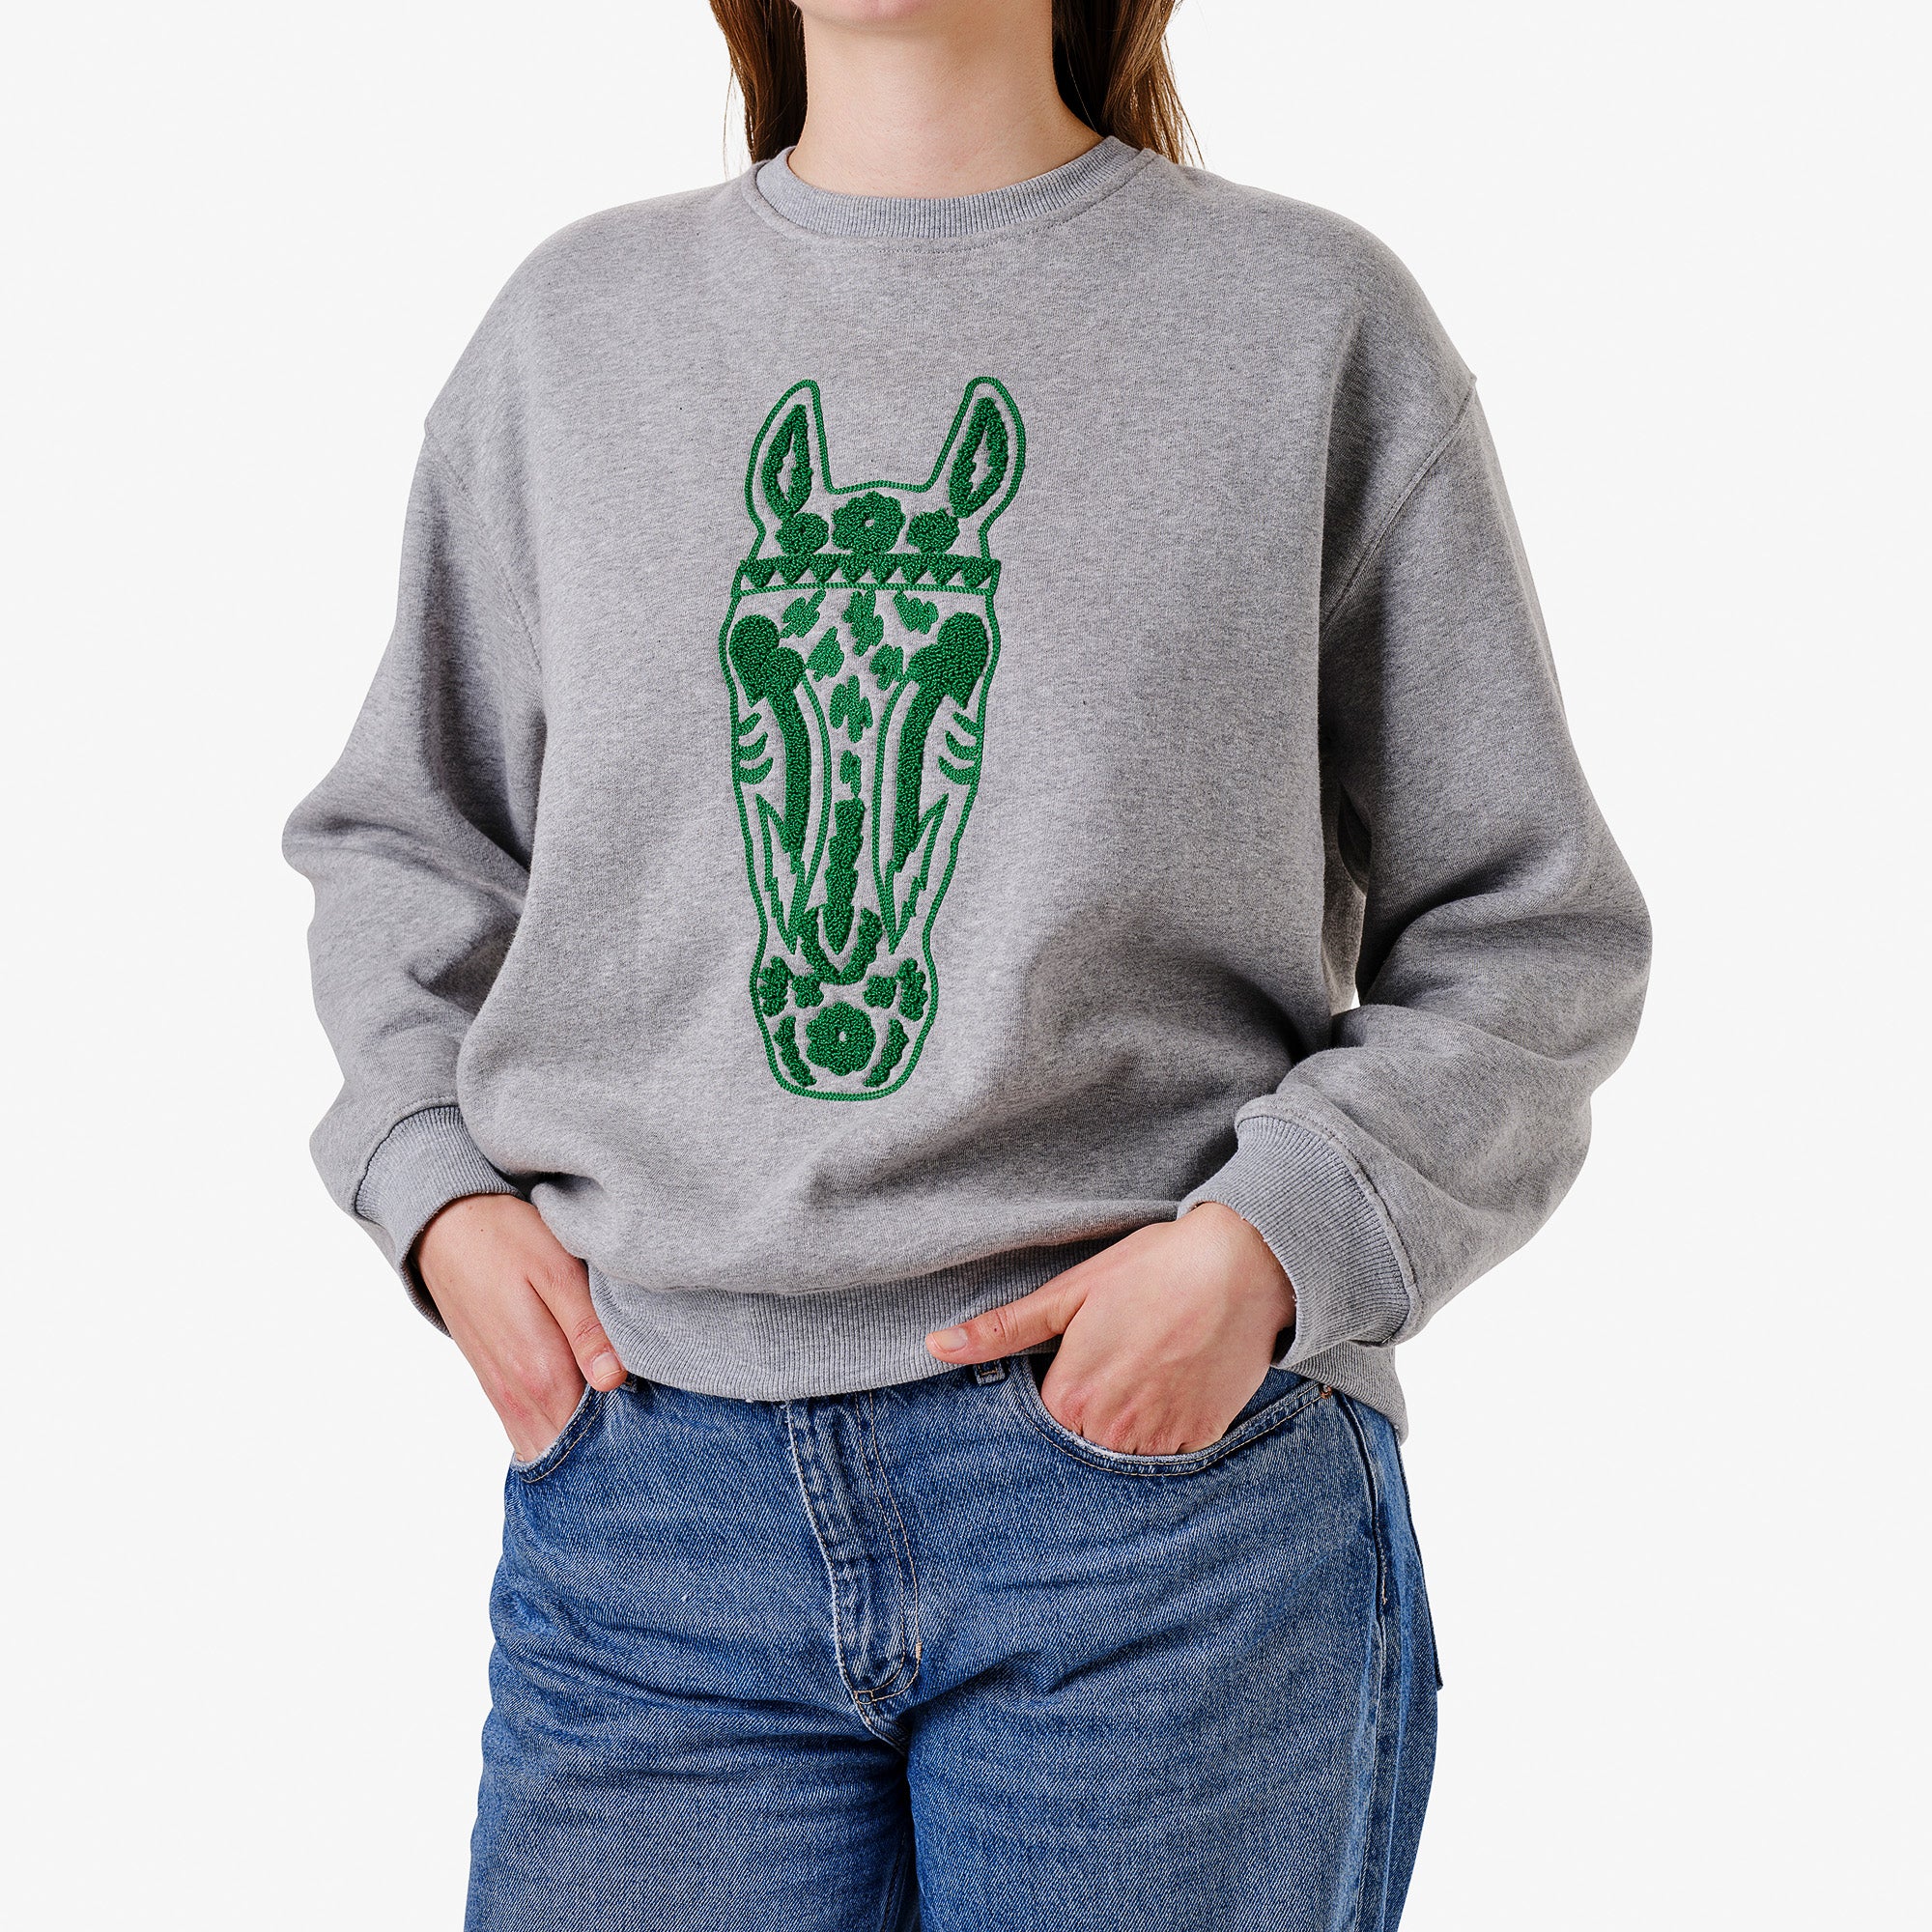 Sweatshirt Horse Lovers Unite